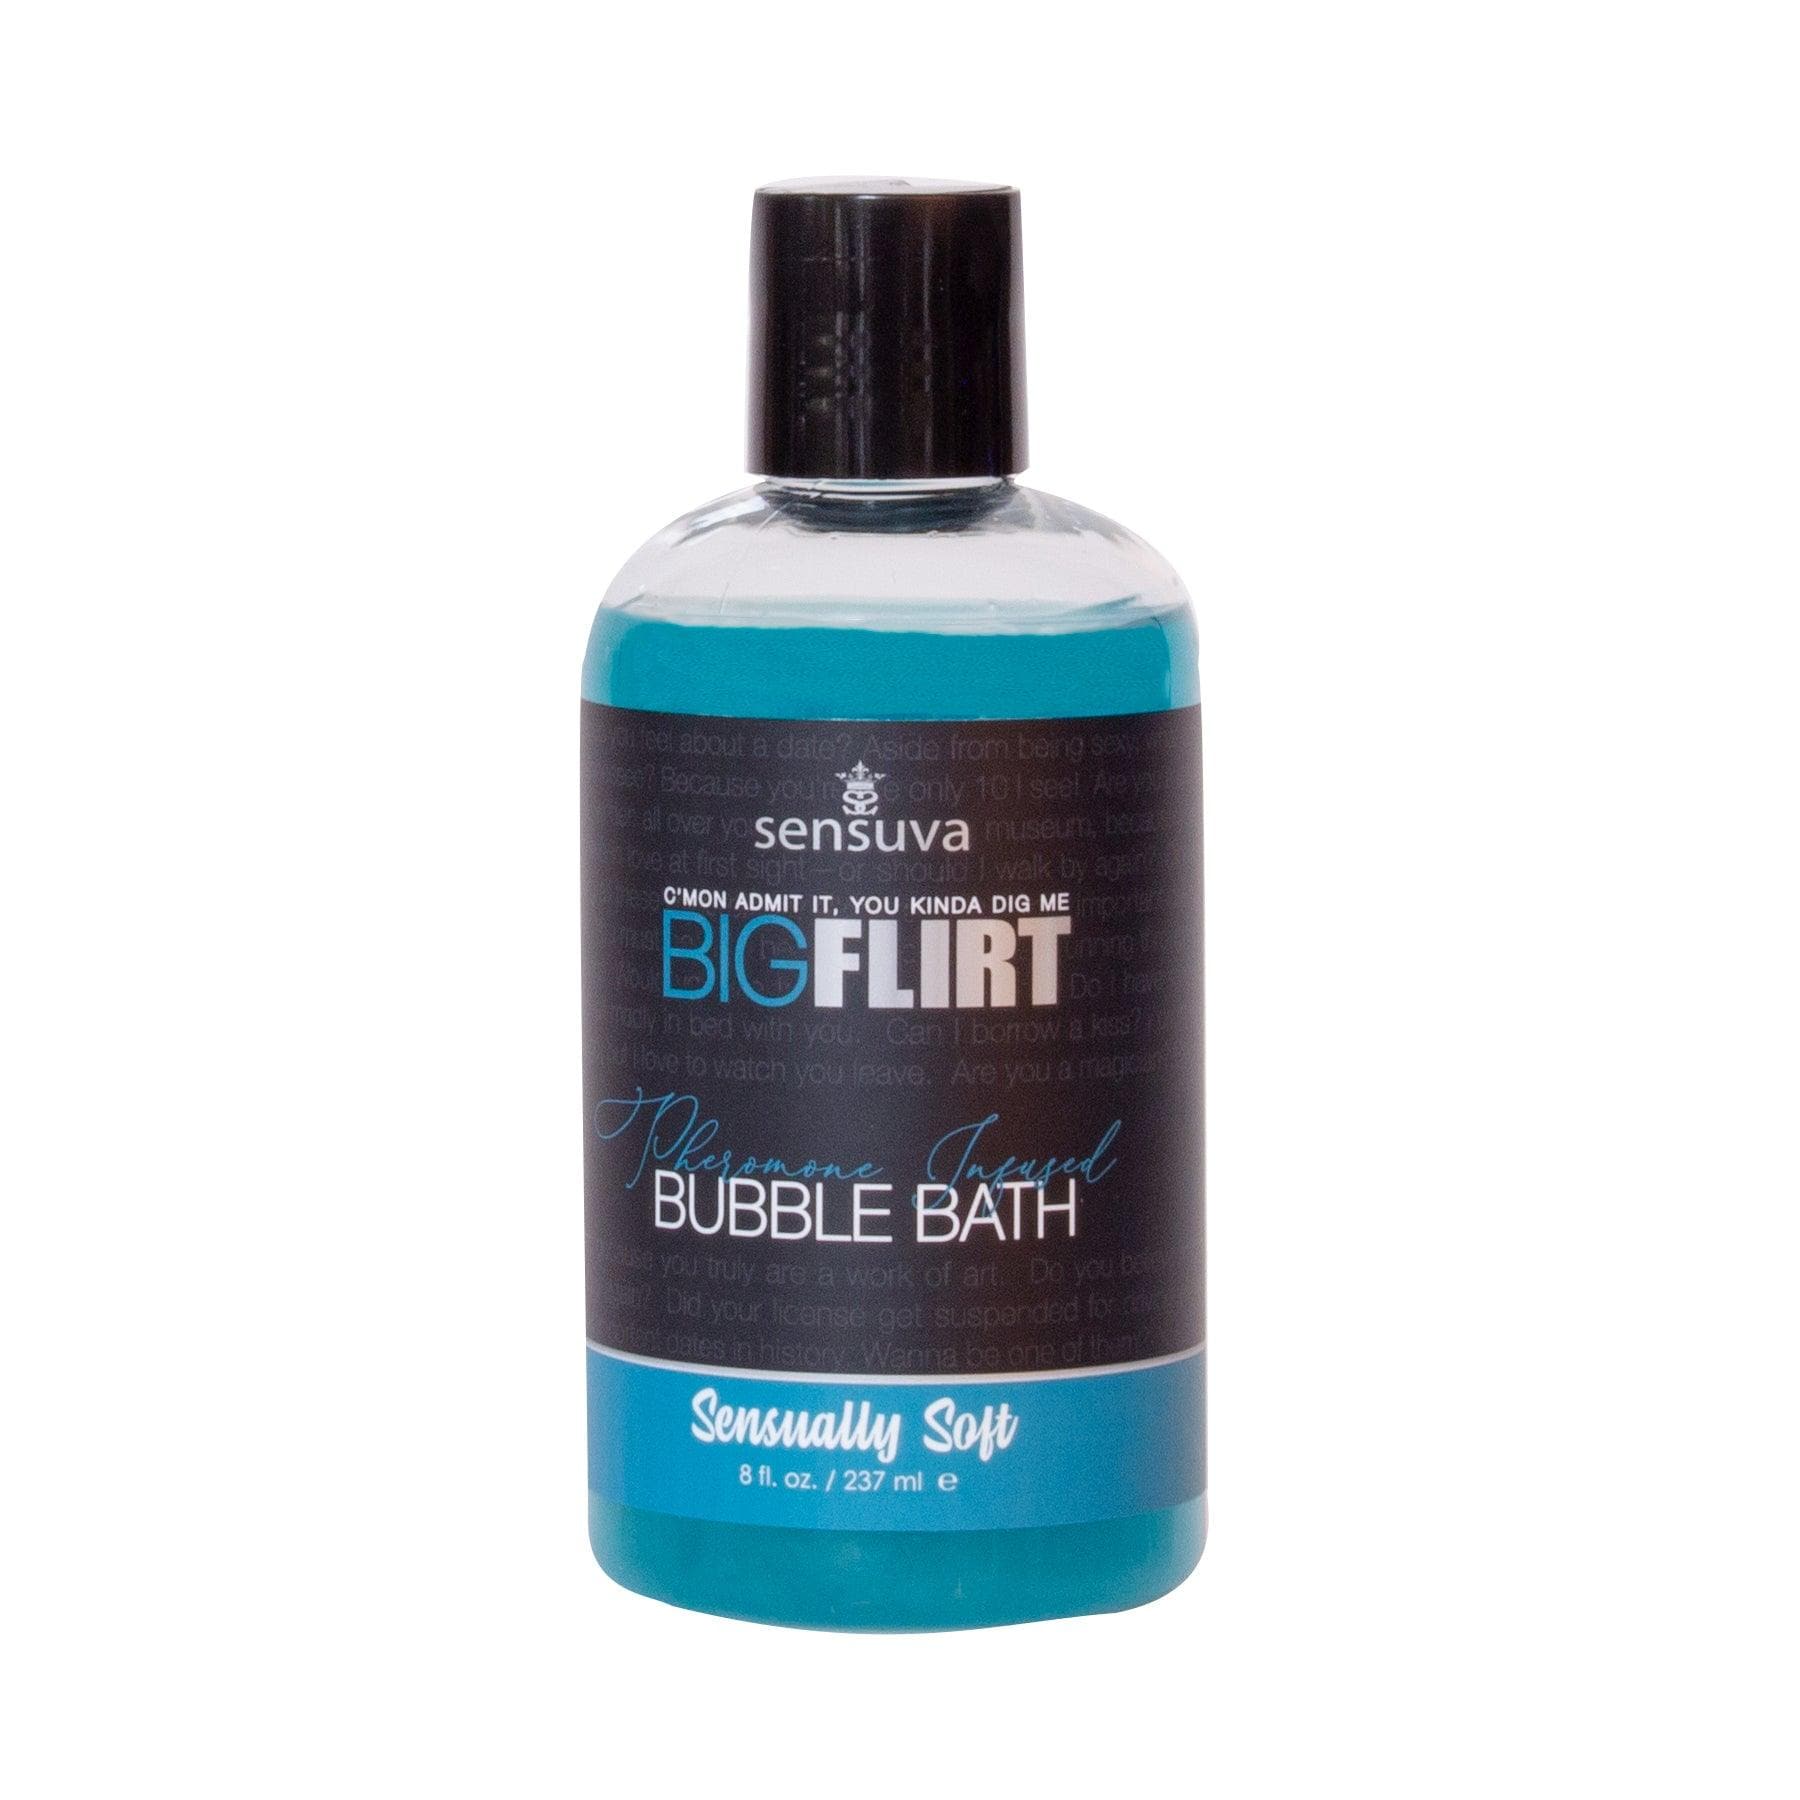 Big Flirt Pheromone Bubble Bath 8 oz - Sensually Soft - Romantic Blessings